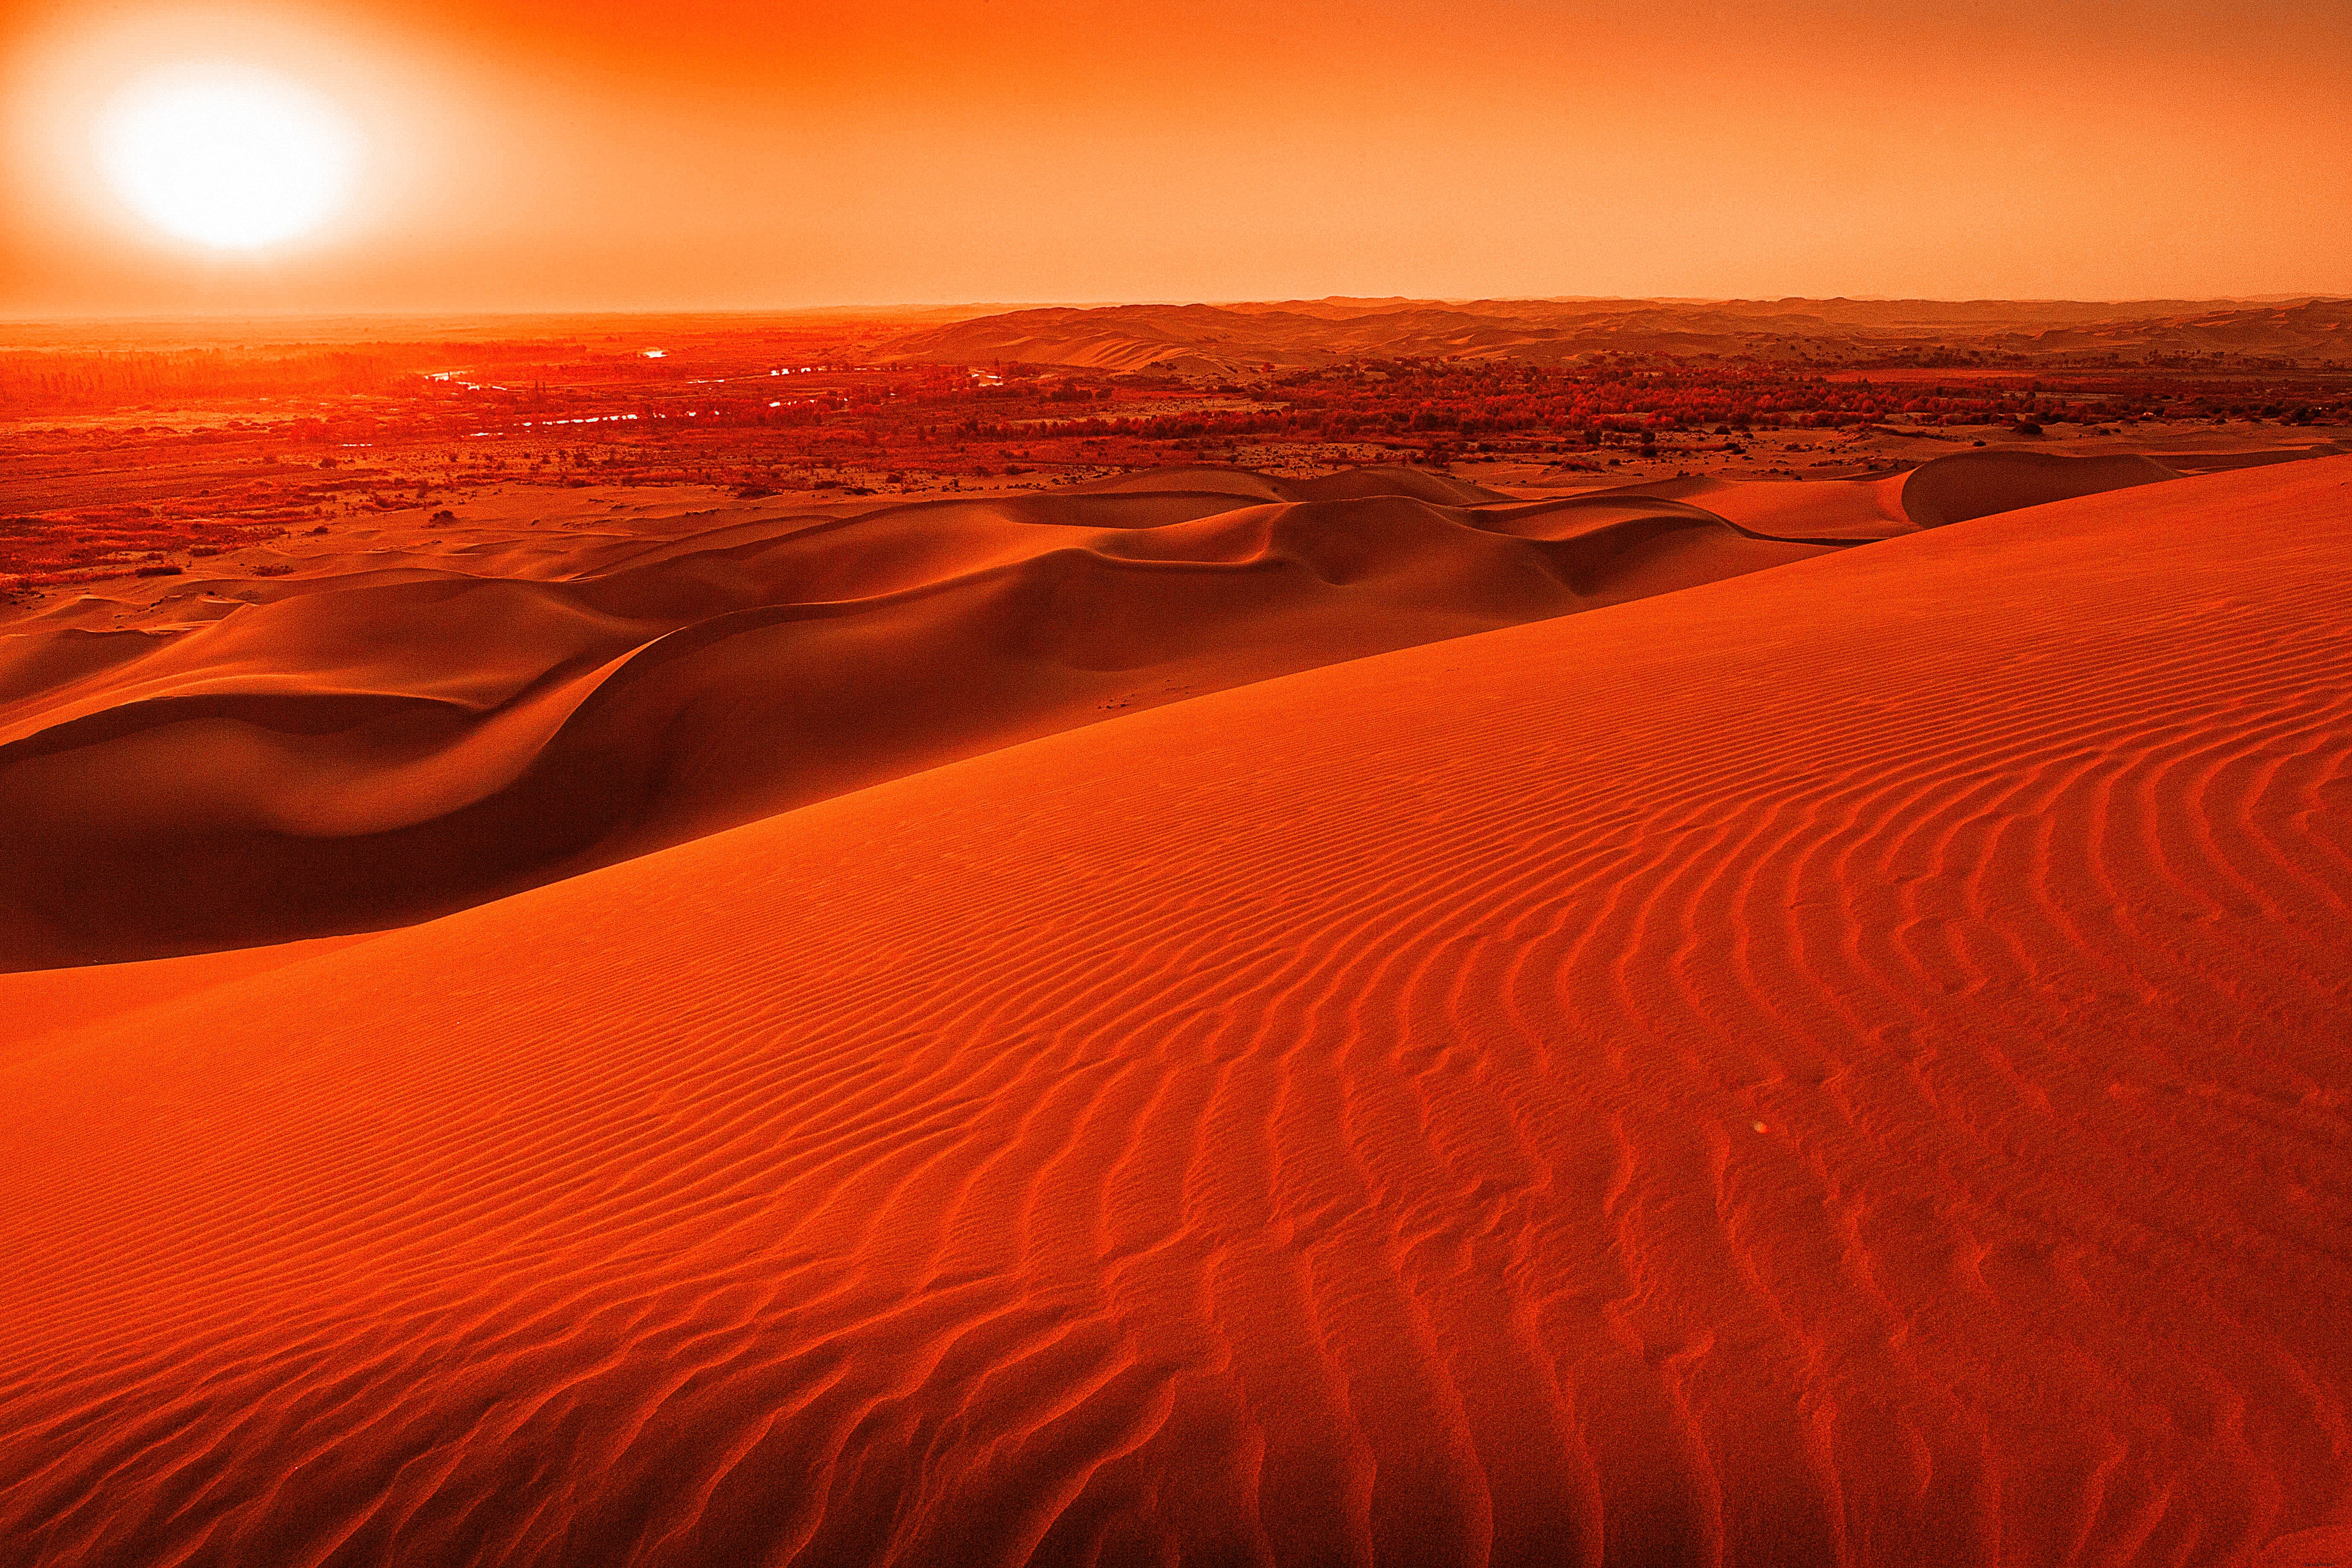 Foto de paisaje de puesta de sol naranja sobre dunas de arena onduladas 